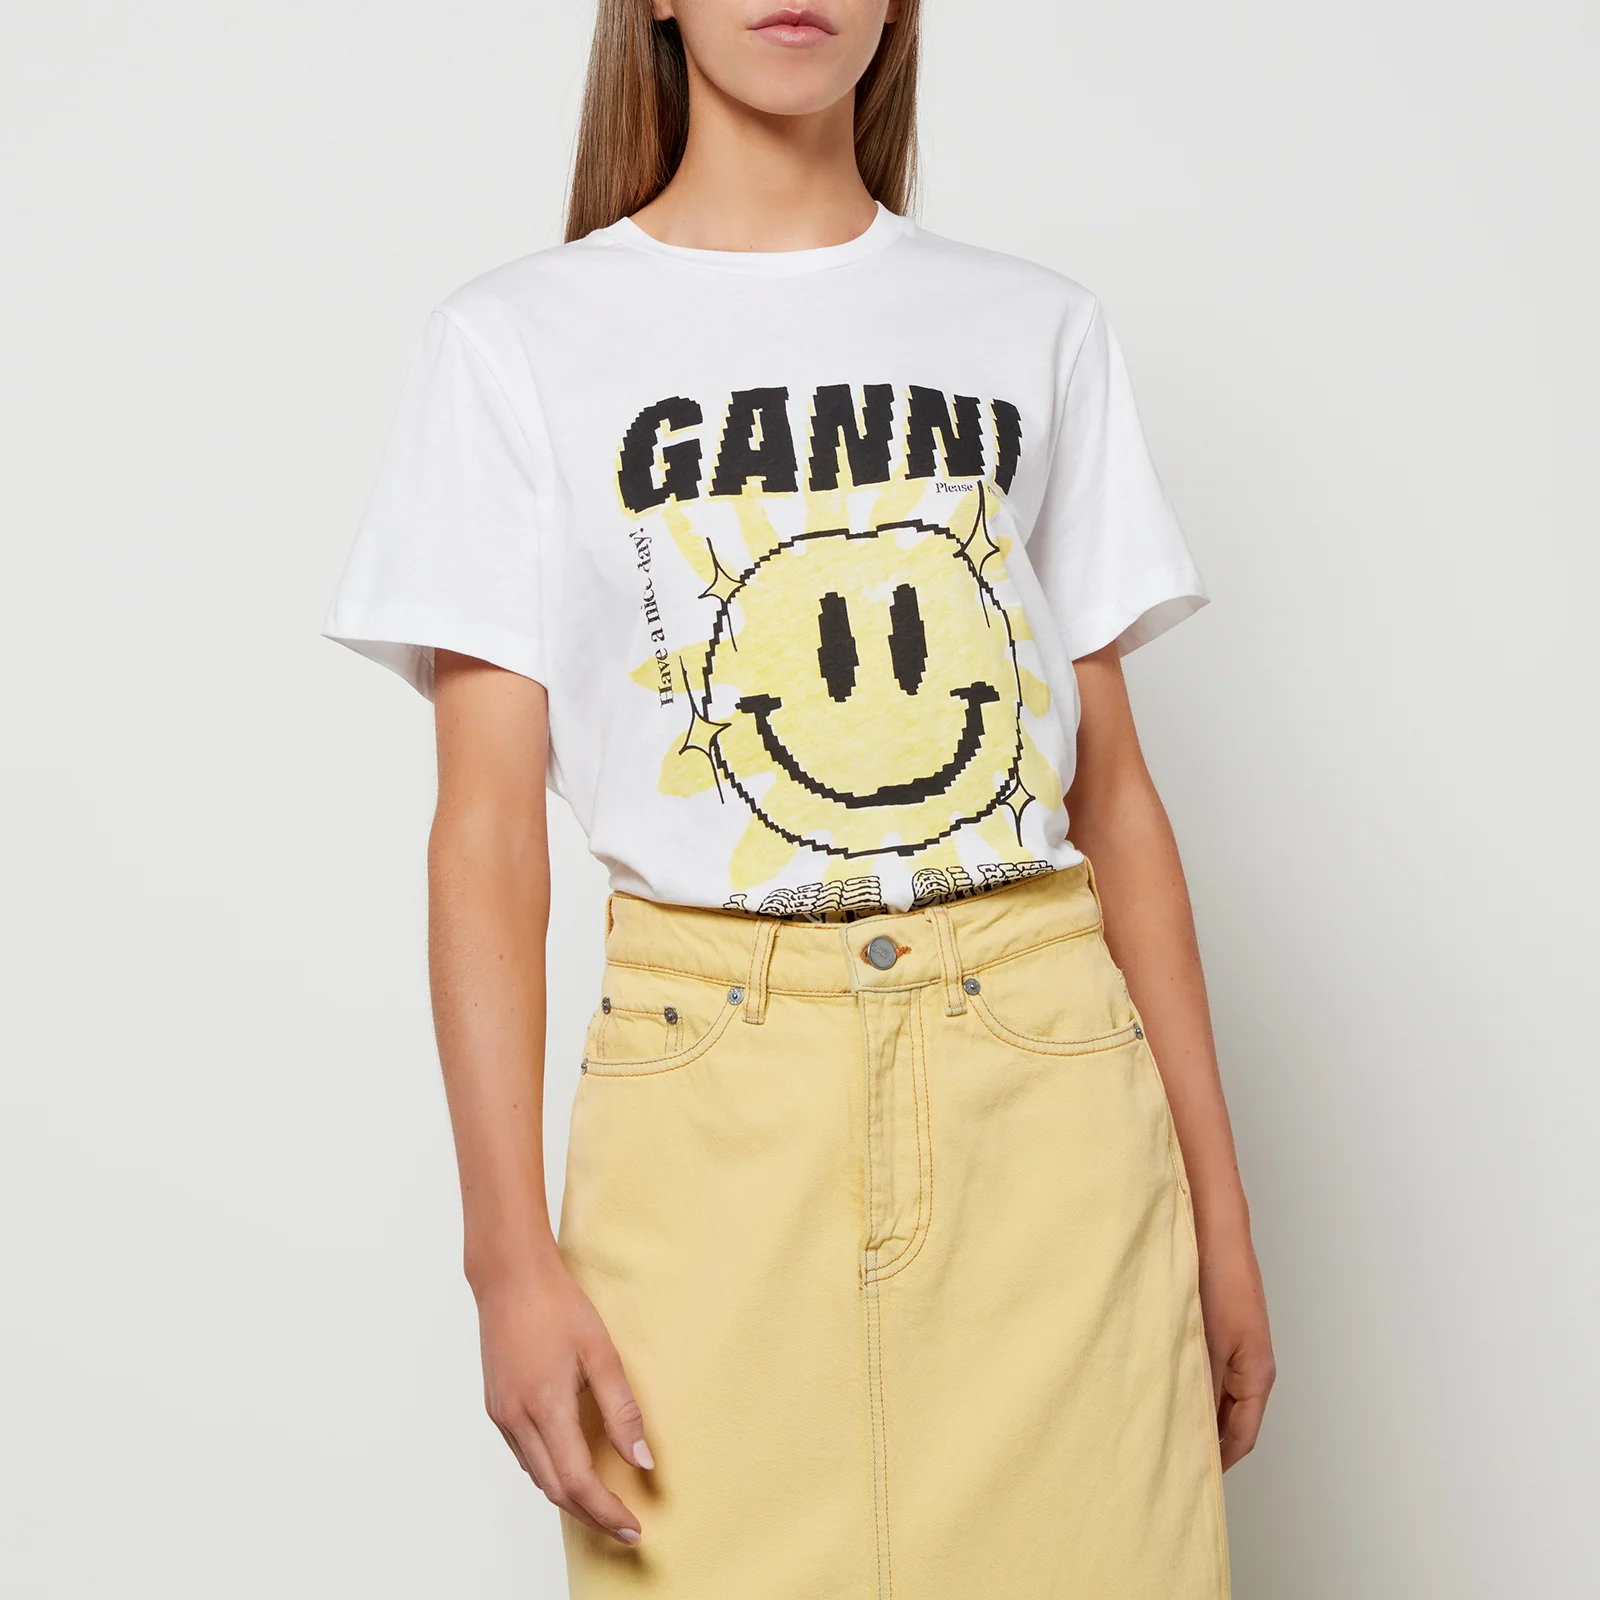 Ganni Women's Light Cotton Jersey Smiley Face T-Shirt - Bright White/Yellow Image 1